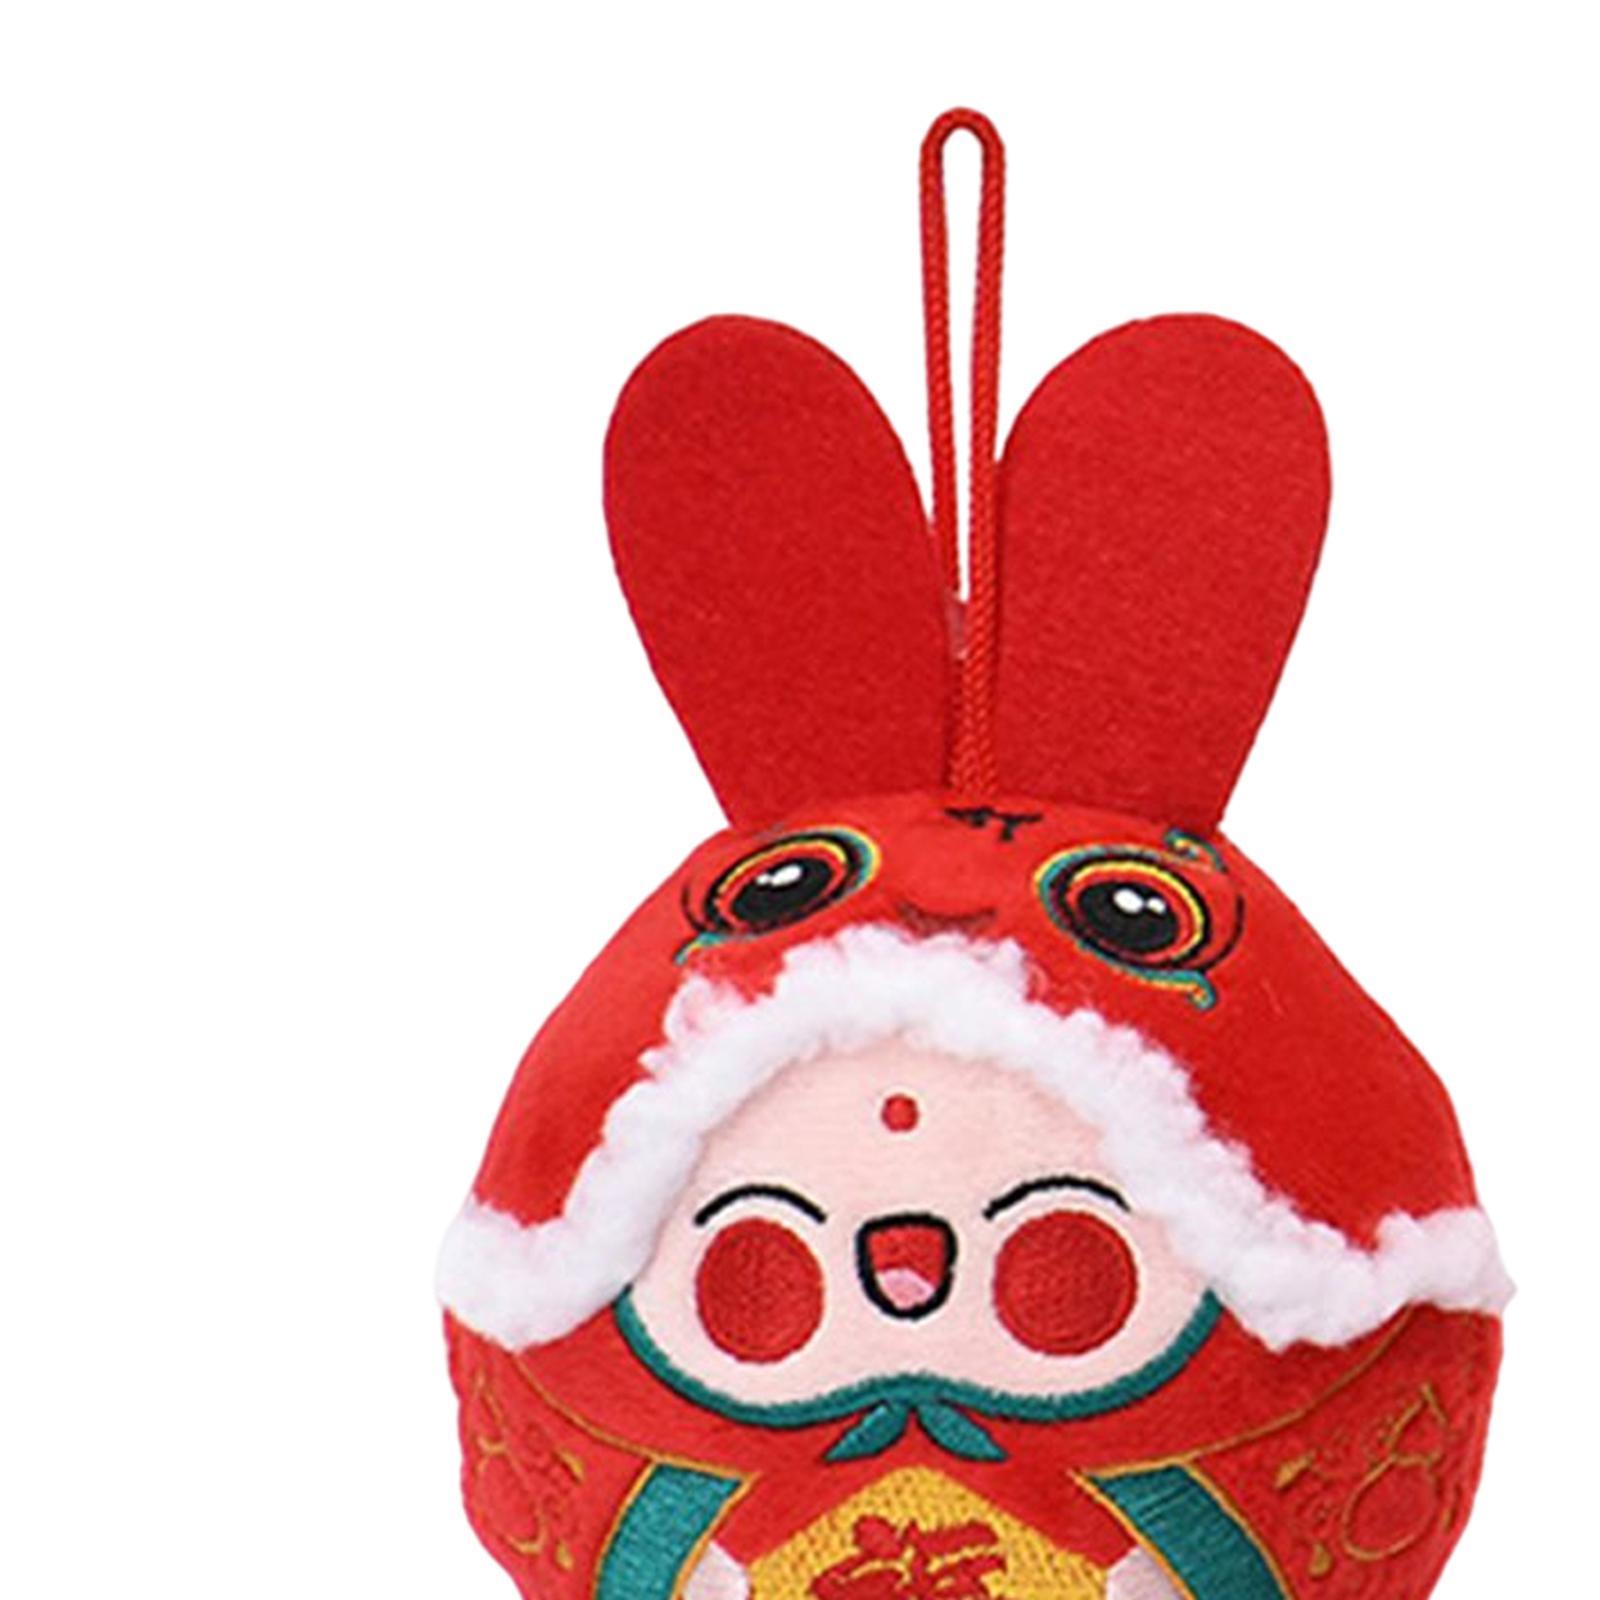 Creative Rabbit Plush Toy Stuffed Animal Doll Desk Ornament for Party Decor